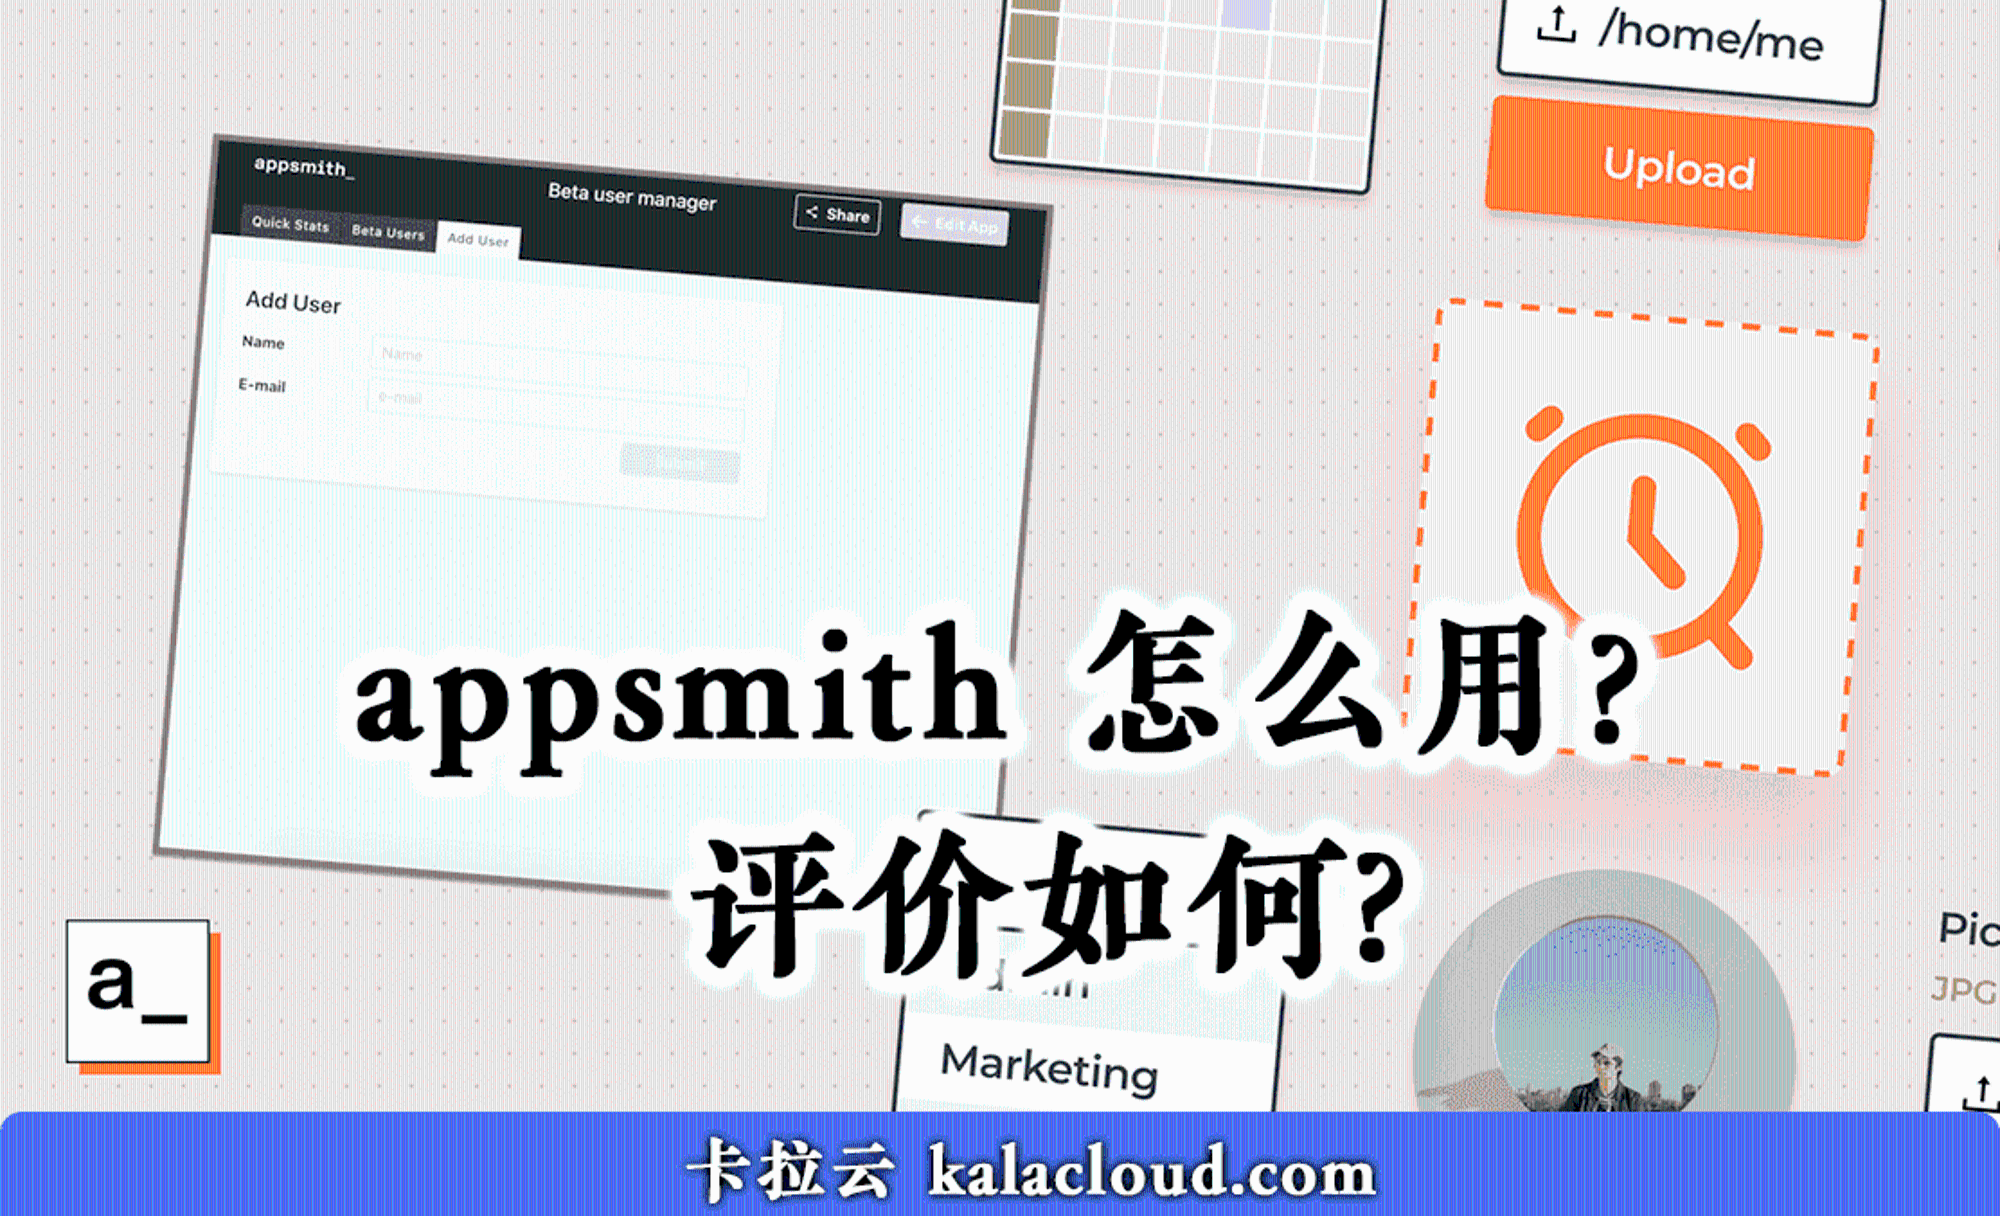 appsmith 怎么用？评价如何